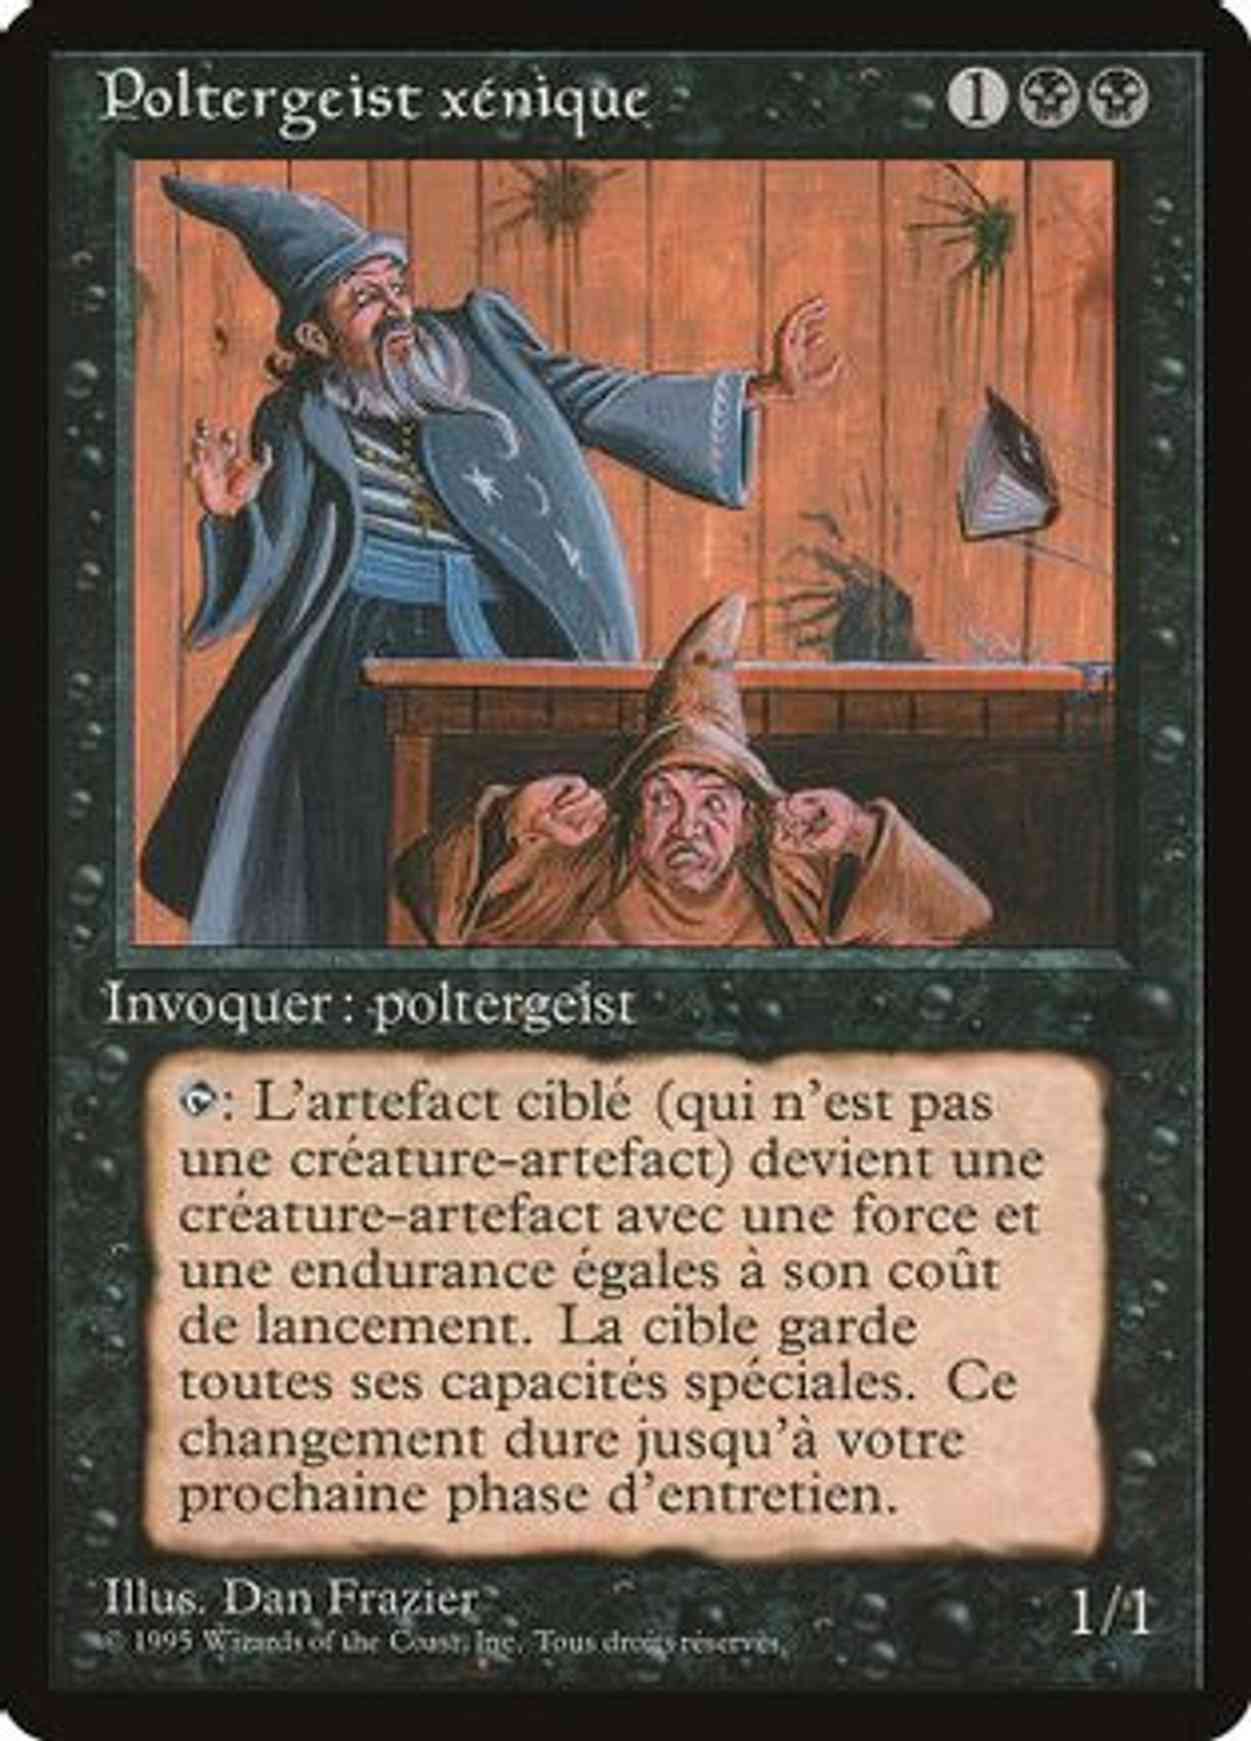 Xenic Poltergeist (French) - "Poltergeist xenique" magic card front